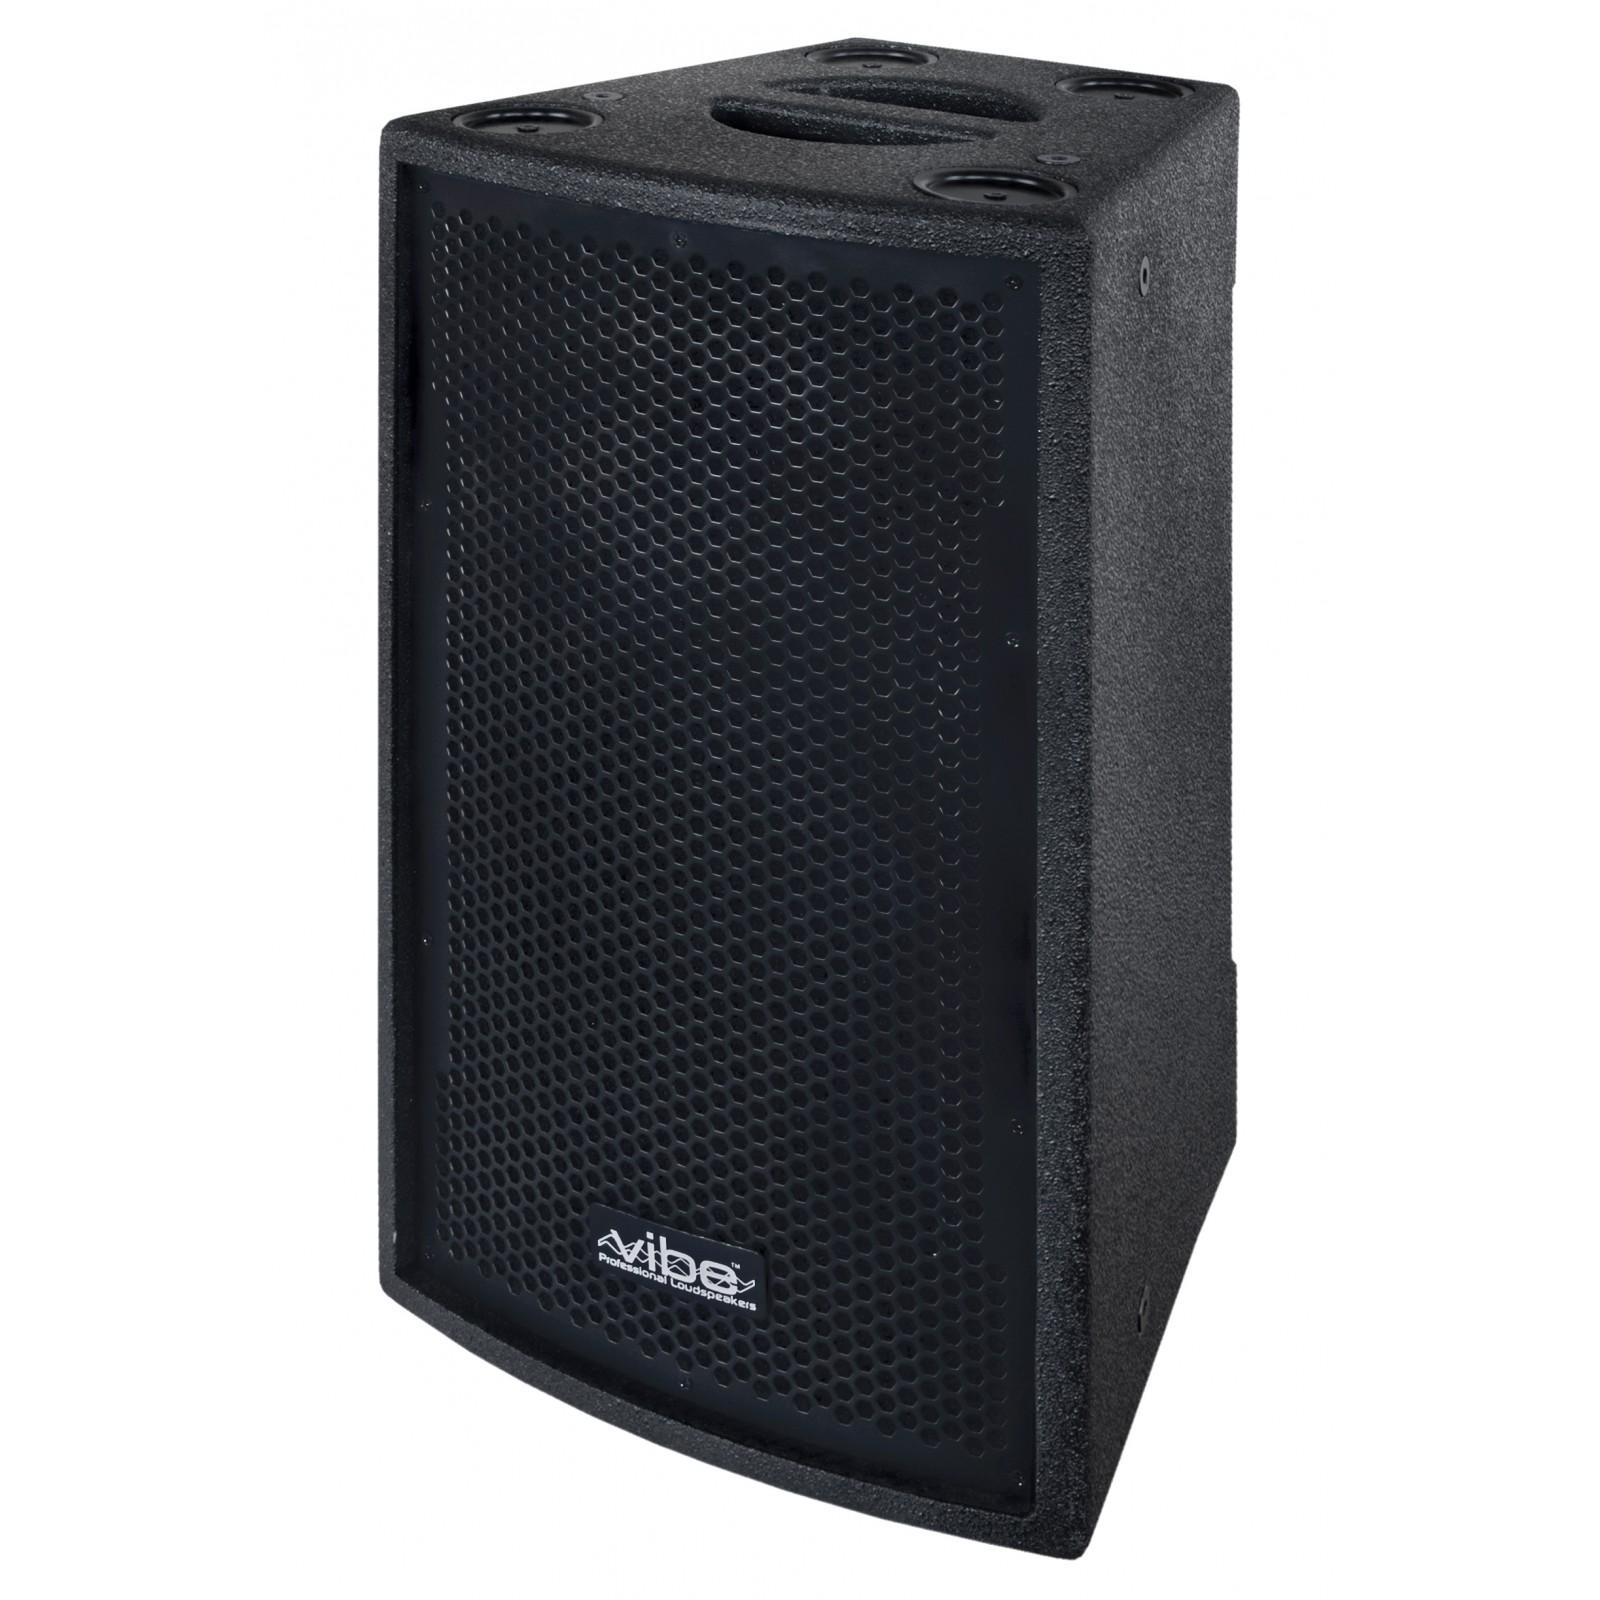 Vibe sound. L Acoustics k1. Woodstock Speaker System Optimus-200mk. II. Звукоусилитель. Vibe 8".